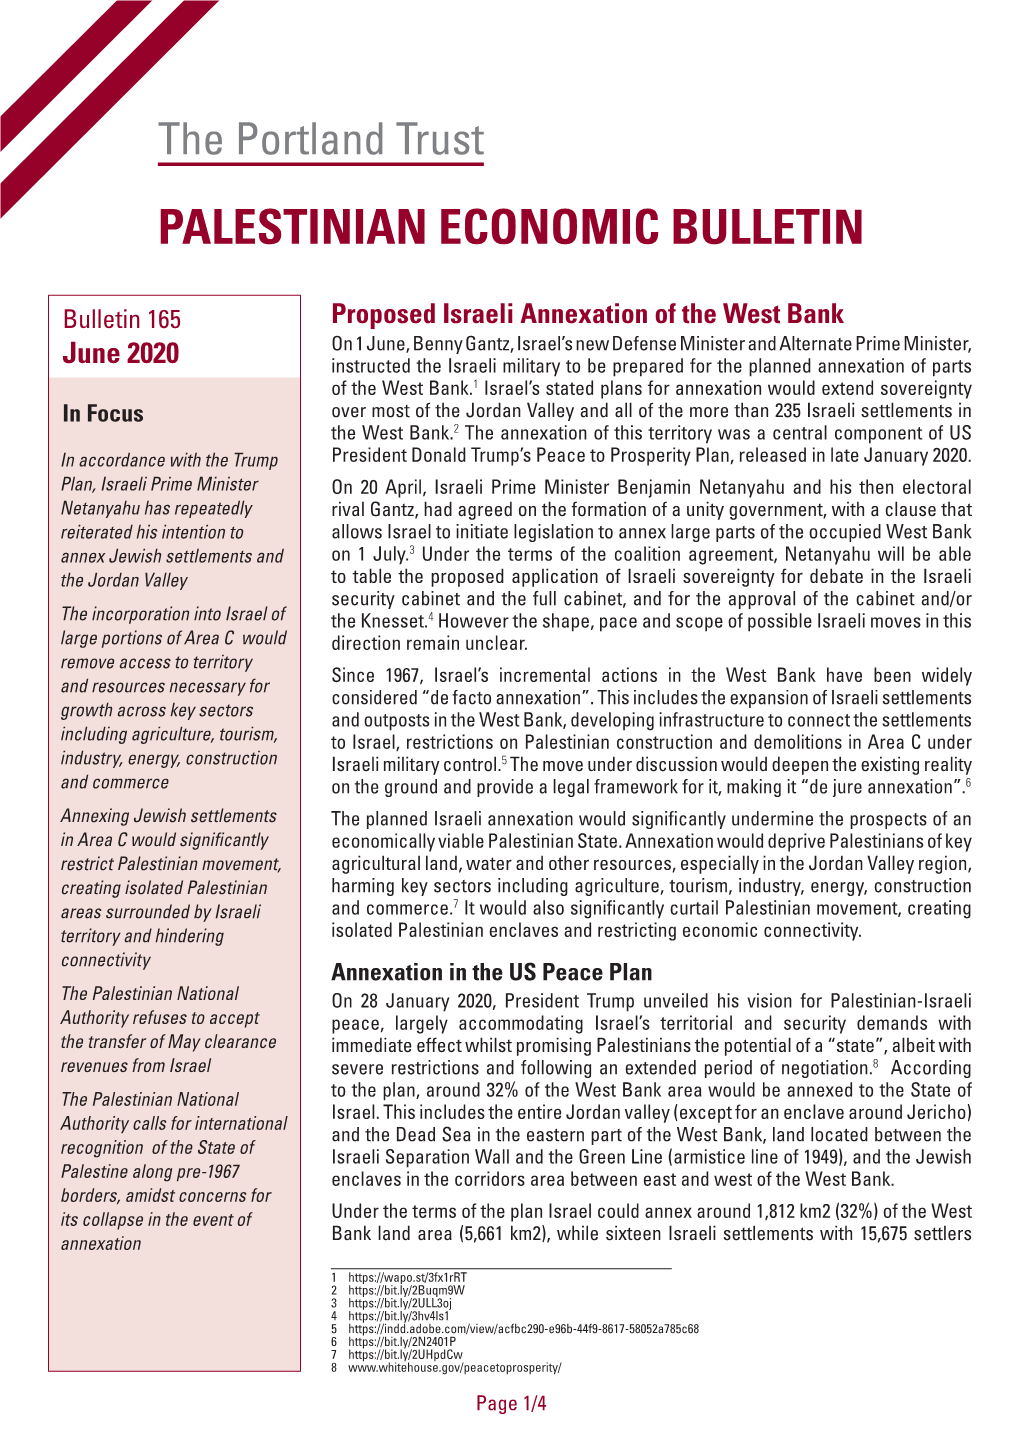 PALESTINIAN ECONOMIC BULLETIN, June 2020